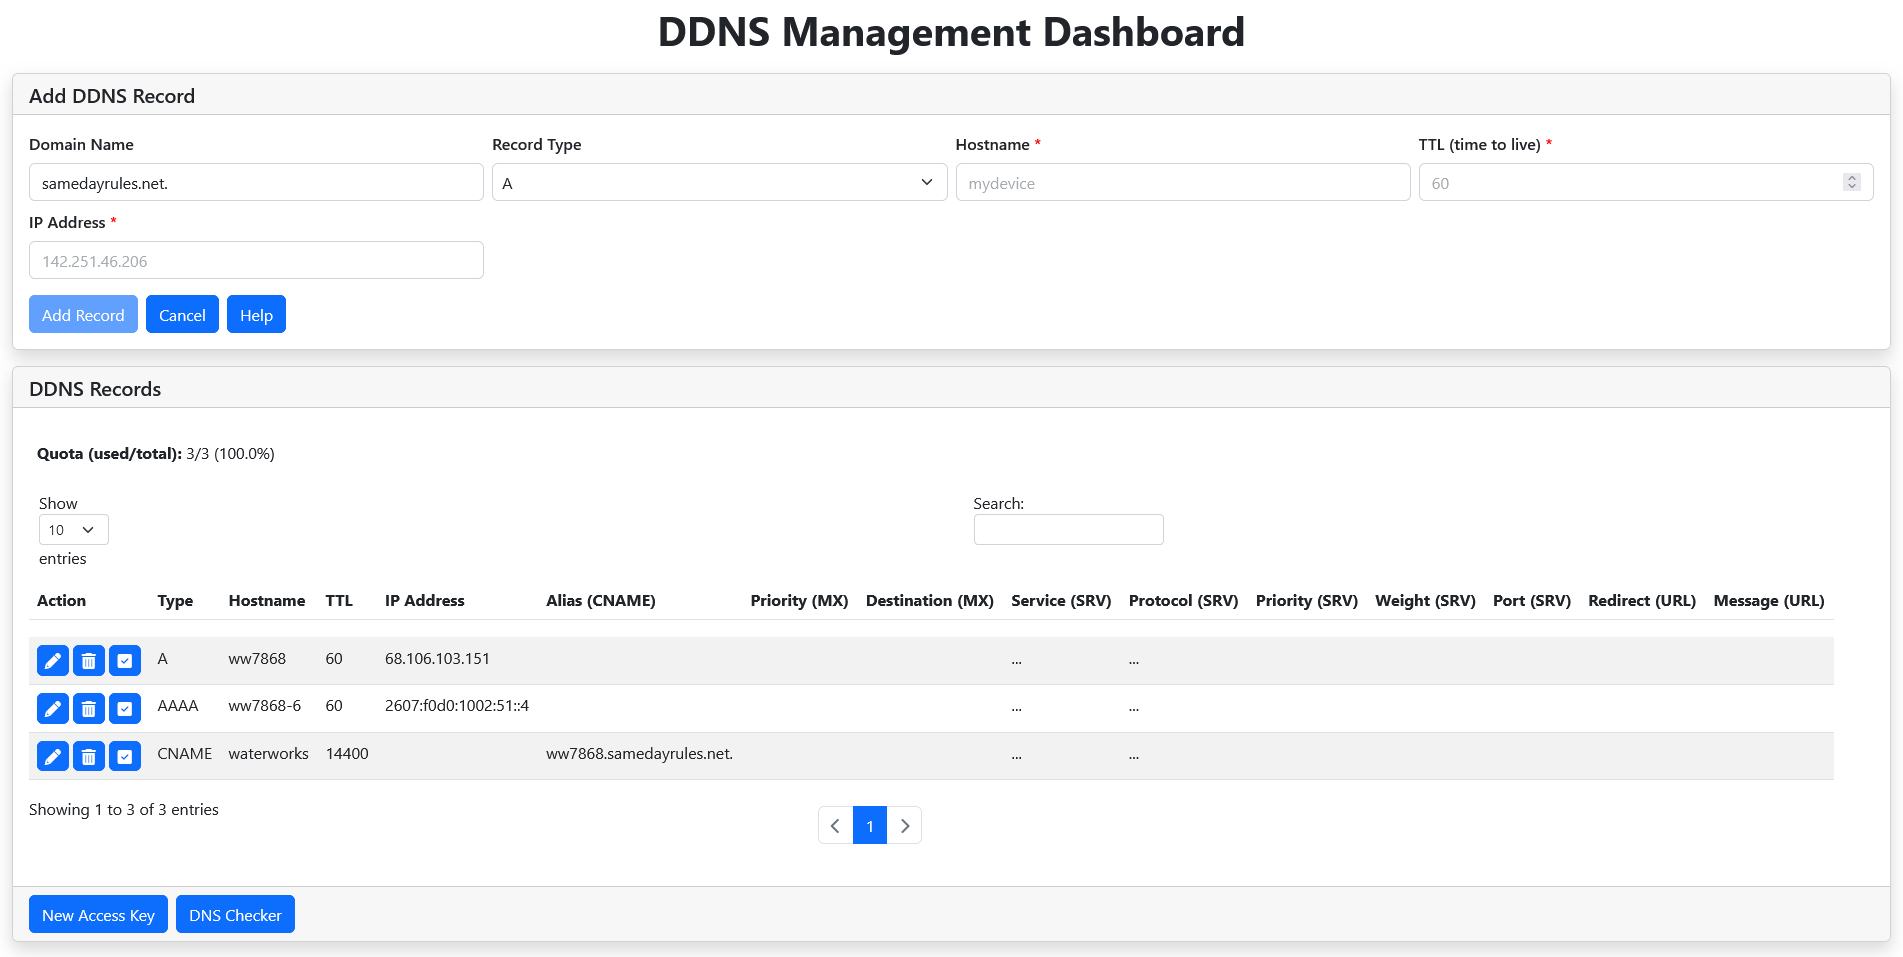 DDNS management dashboard.